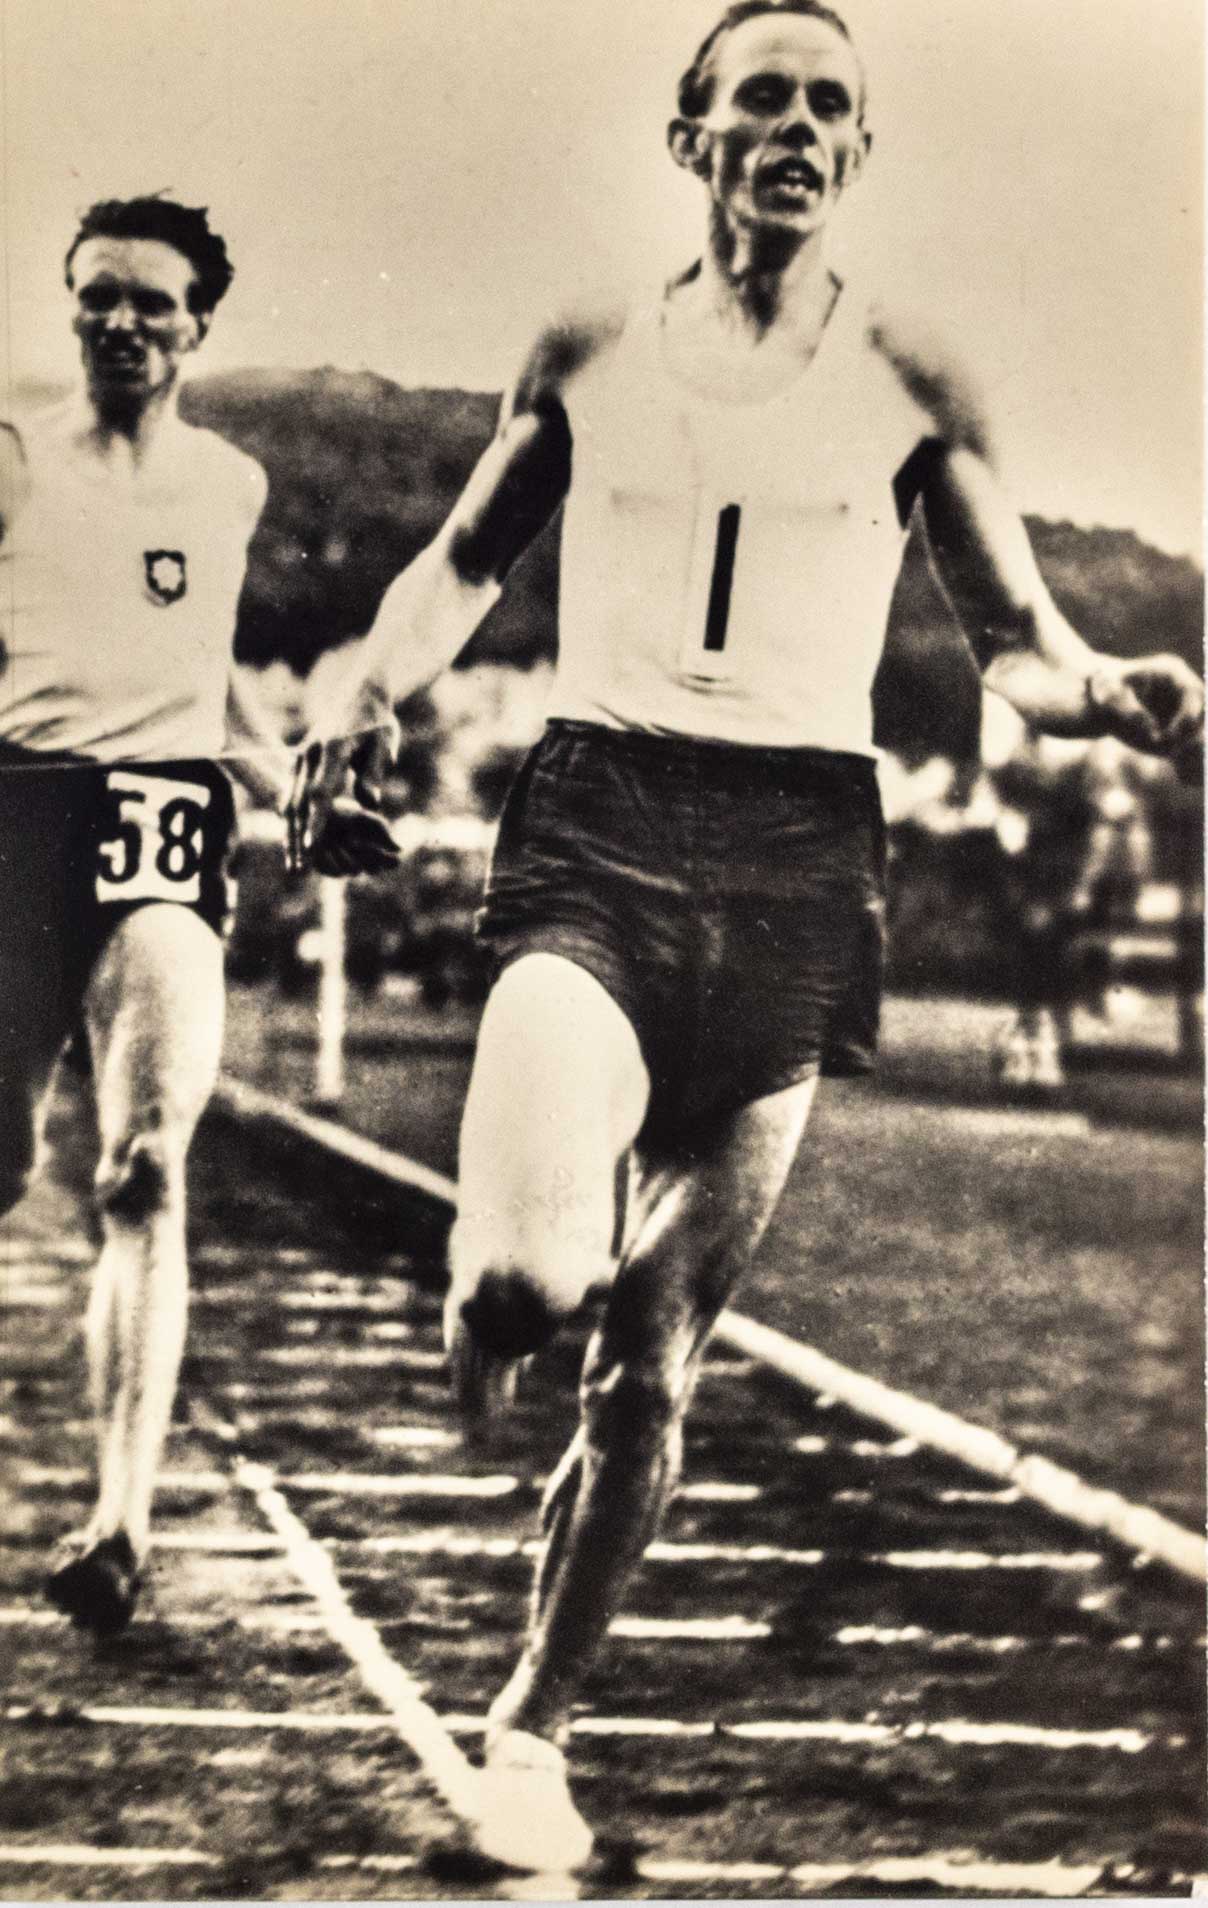 Fotografie, Gunder Haag, 1500 m, Pressfoto